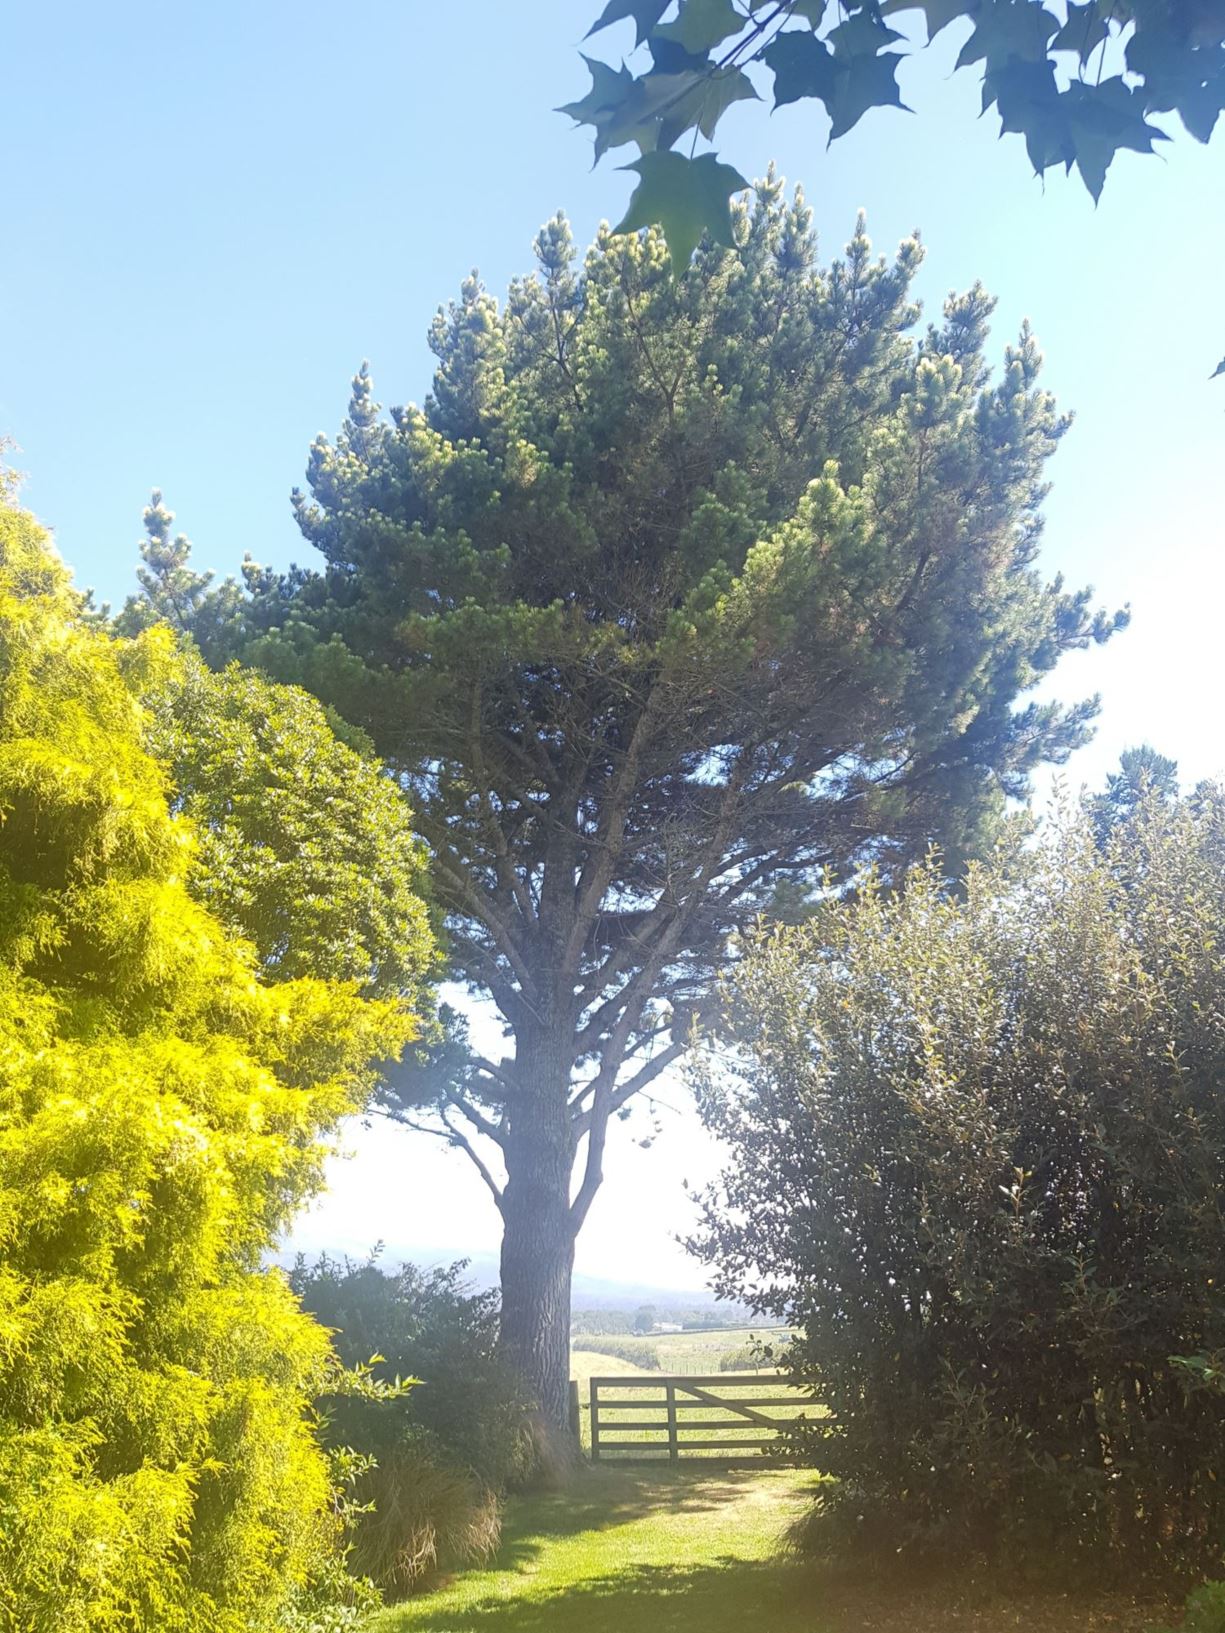 Pinus radiata - Monterey pine